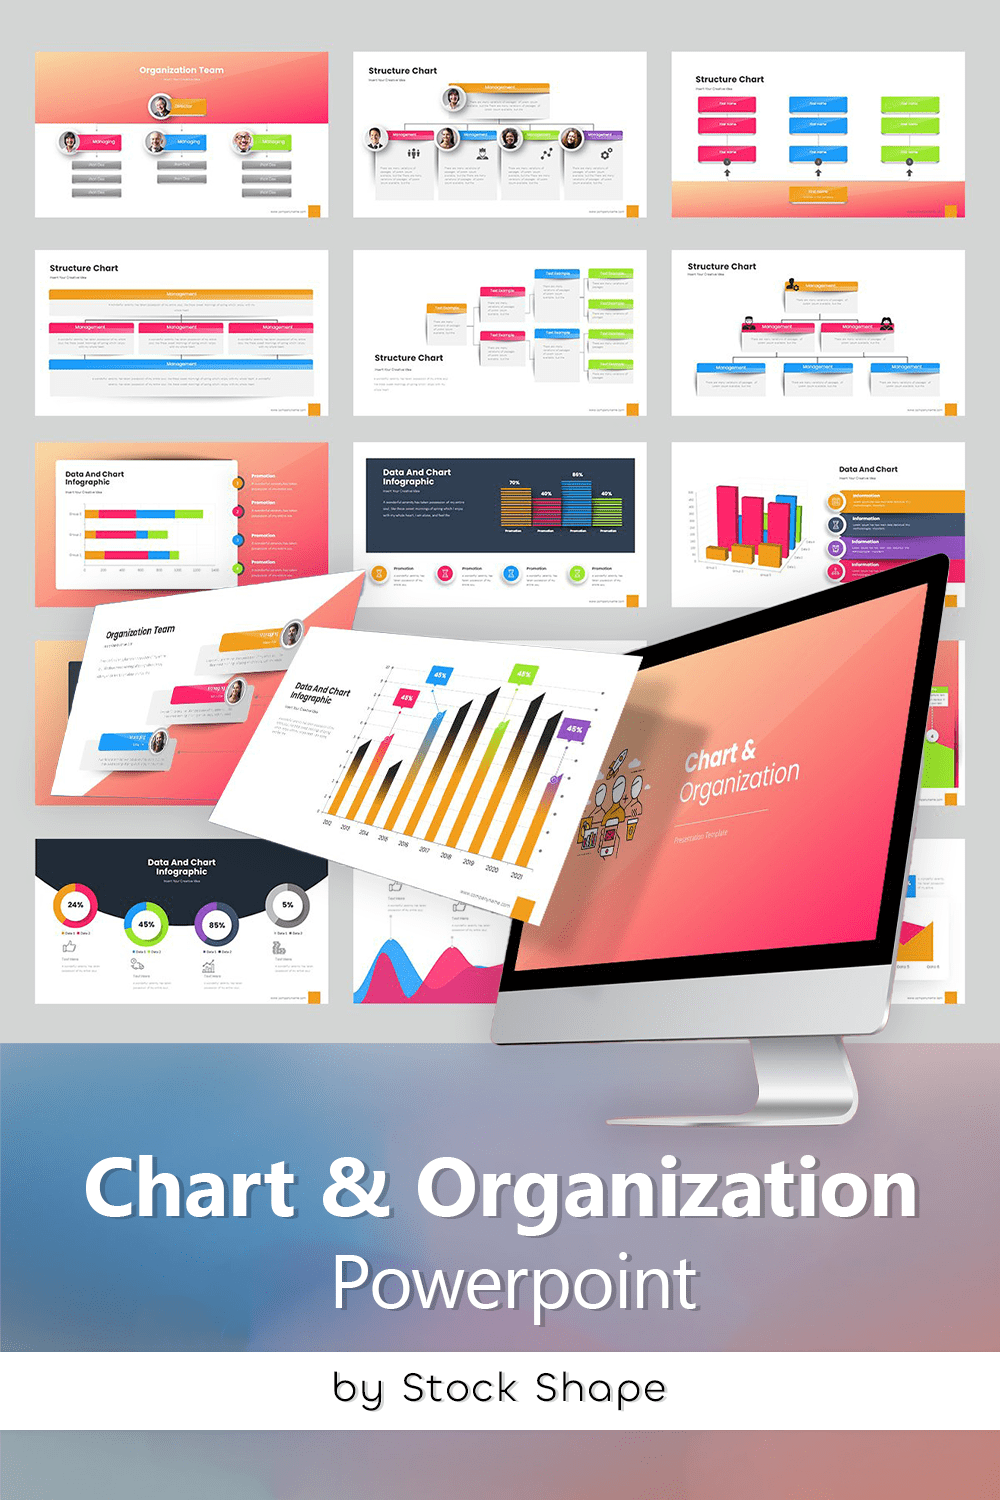 Chart & Organization PowerPoint pinterest image.